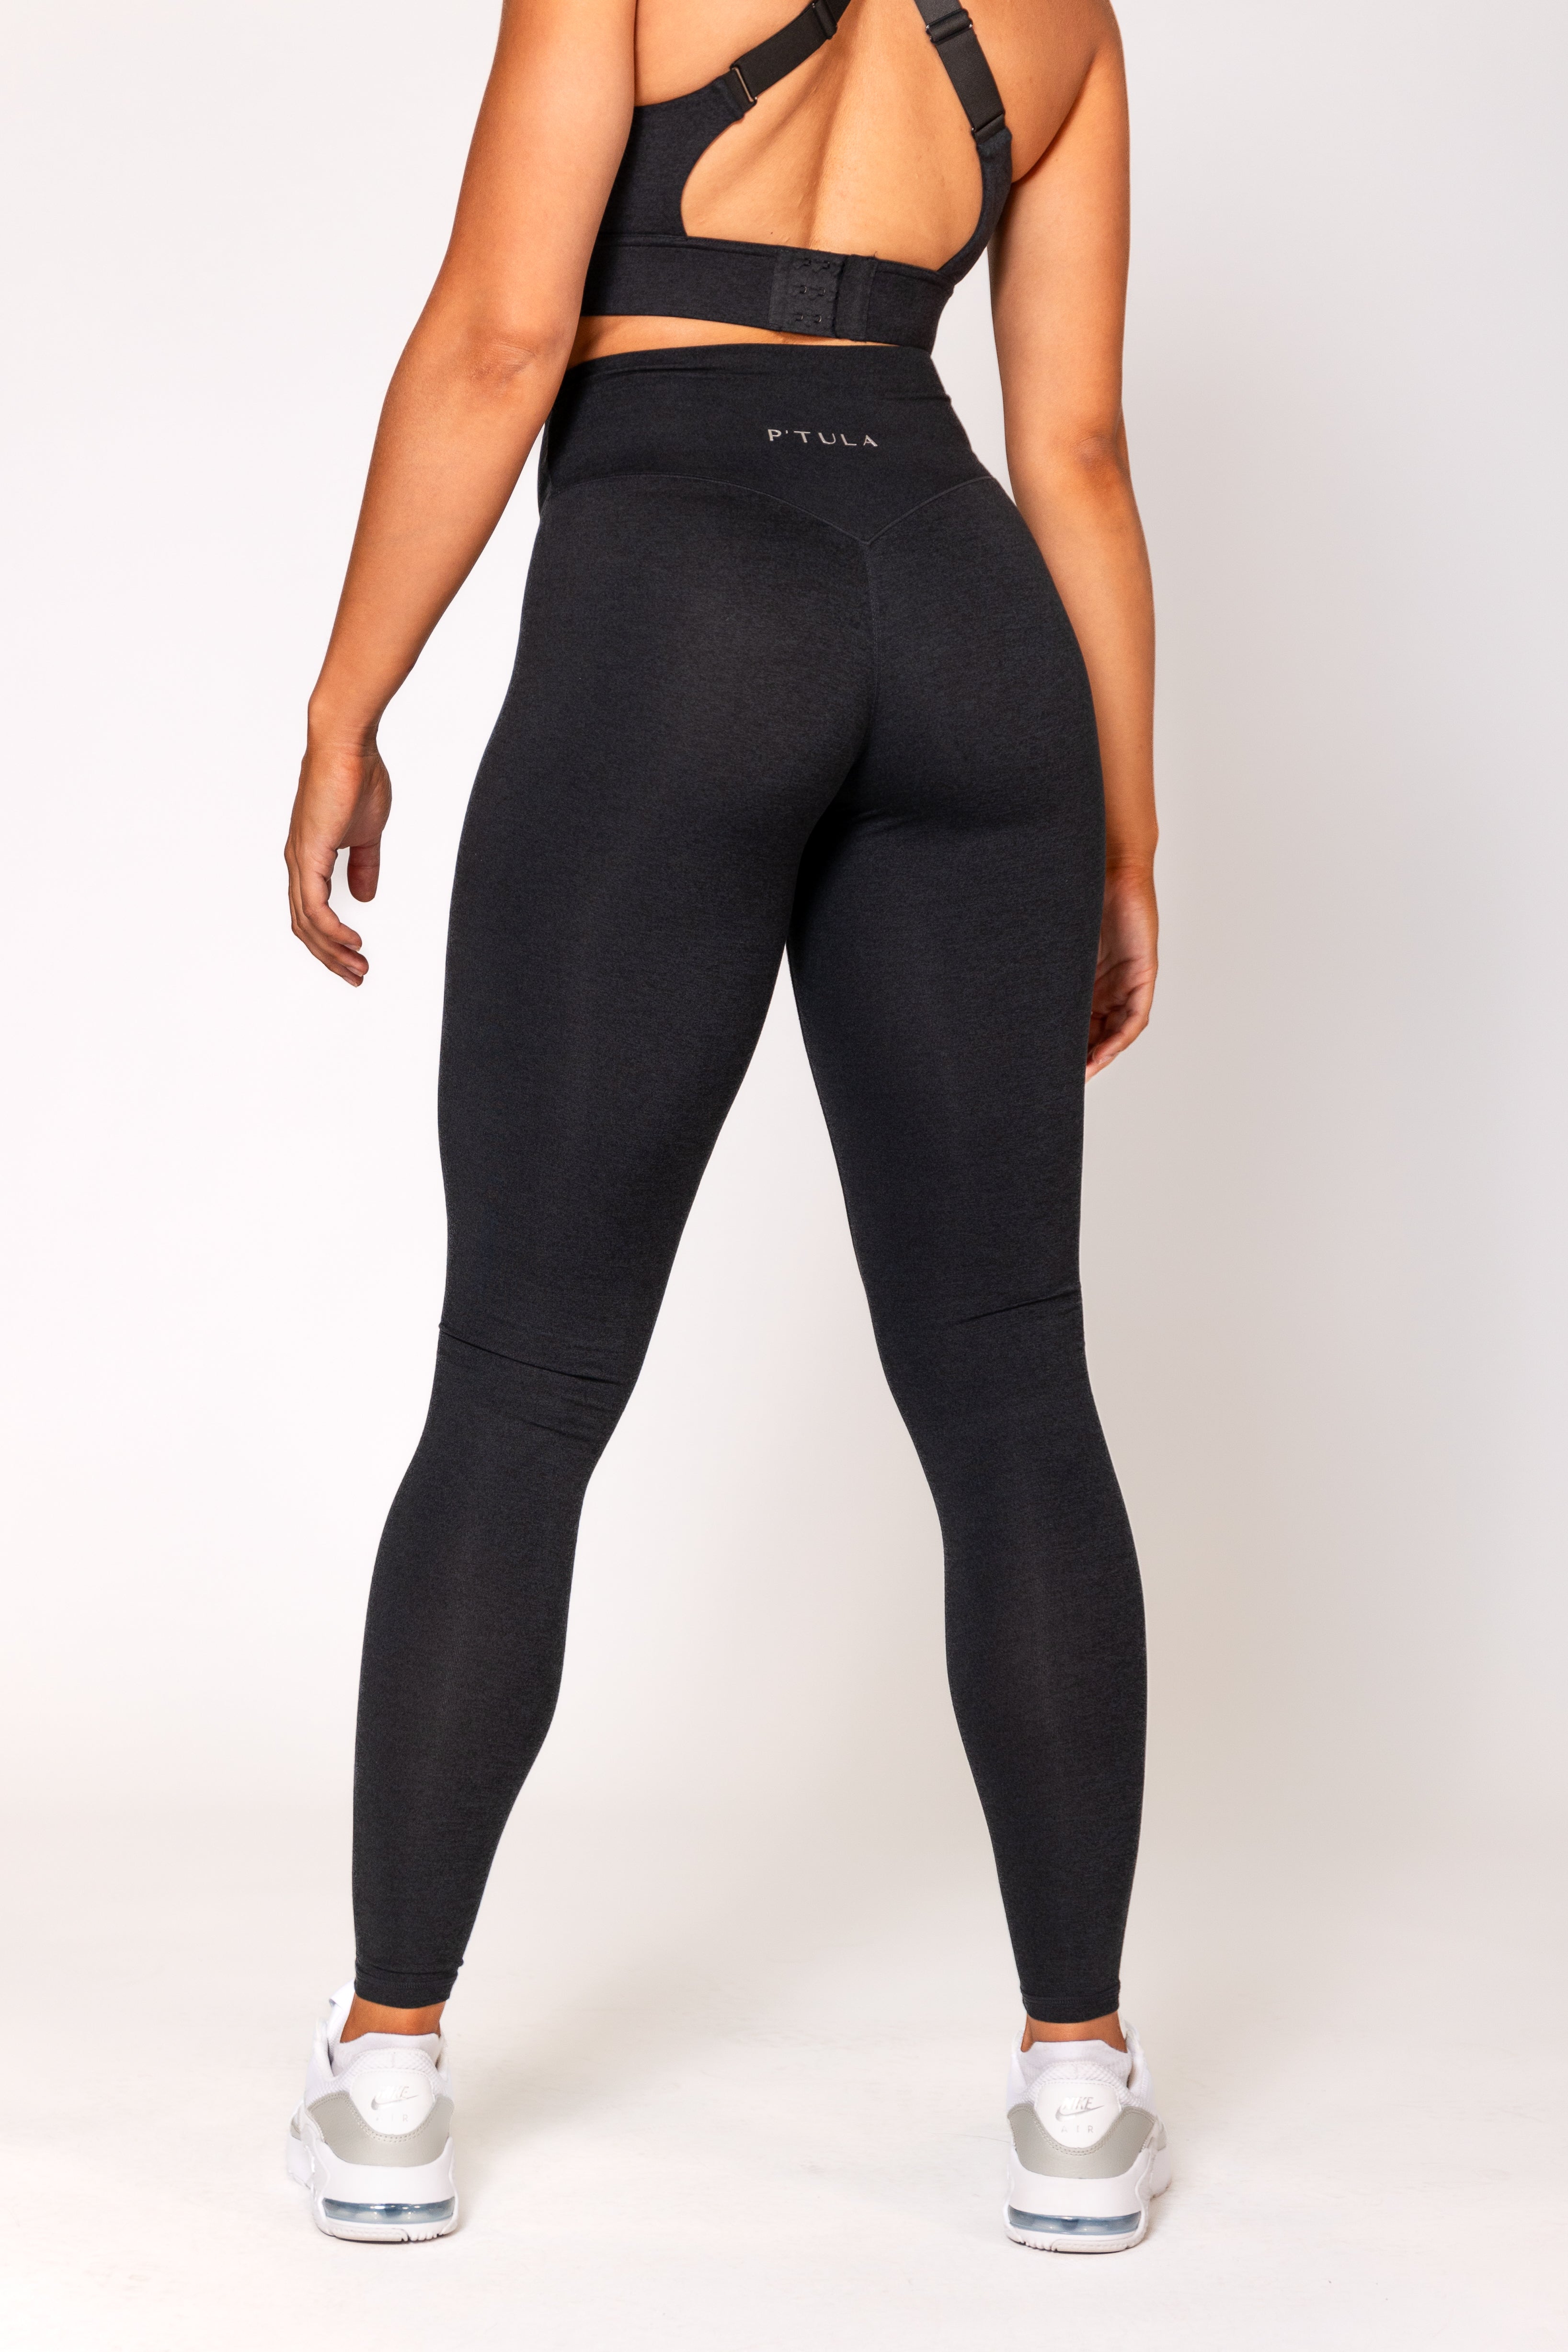 Sylvia P Iconic Full Length Legging - Girls - Black - Dancewear Centre